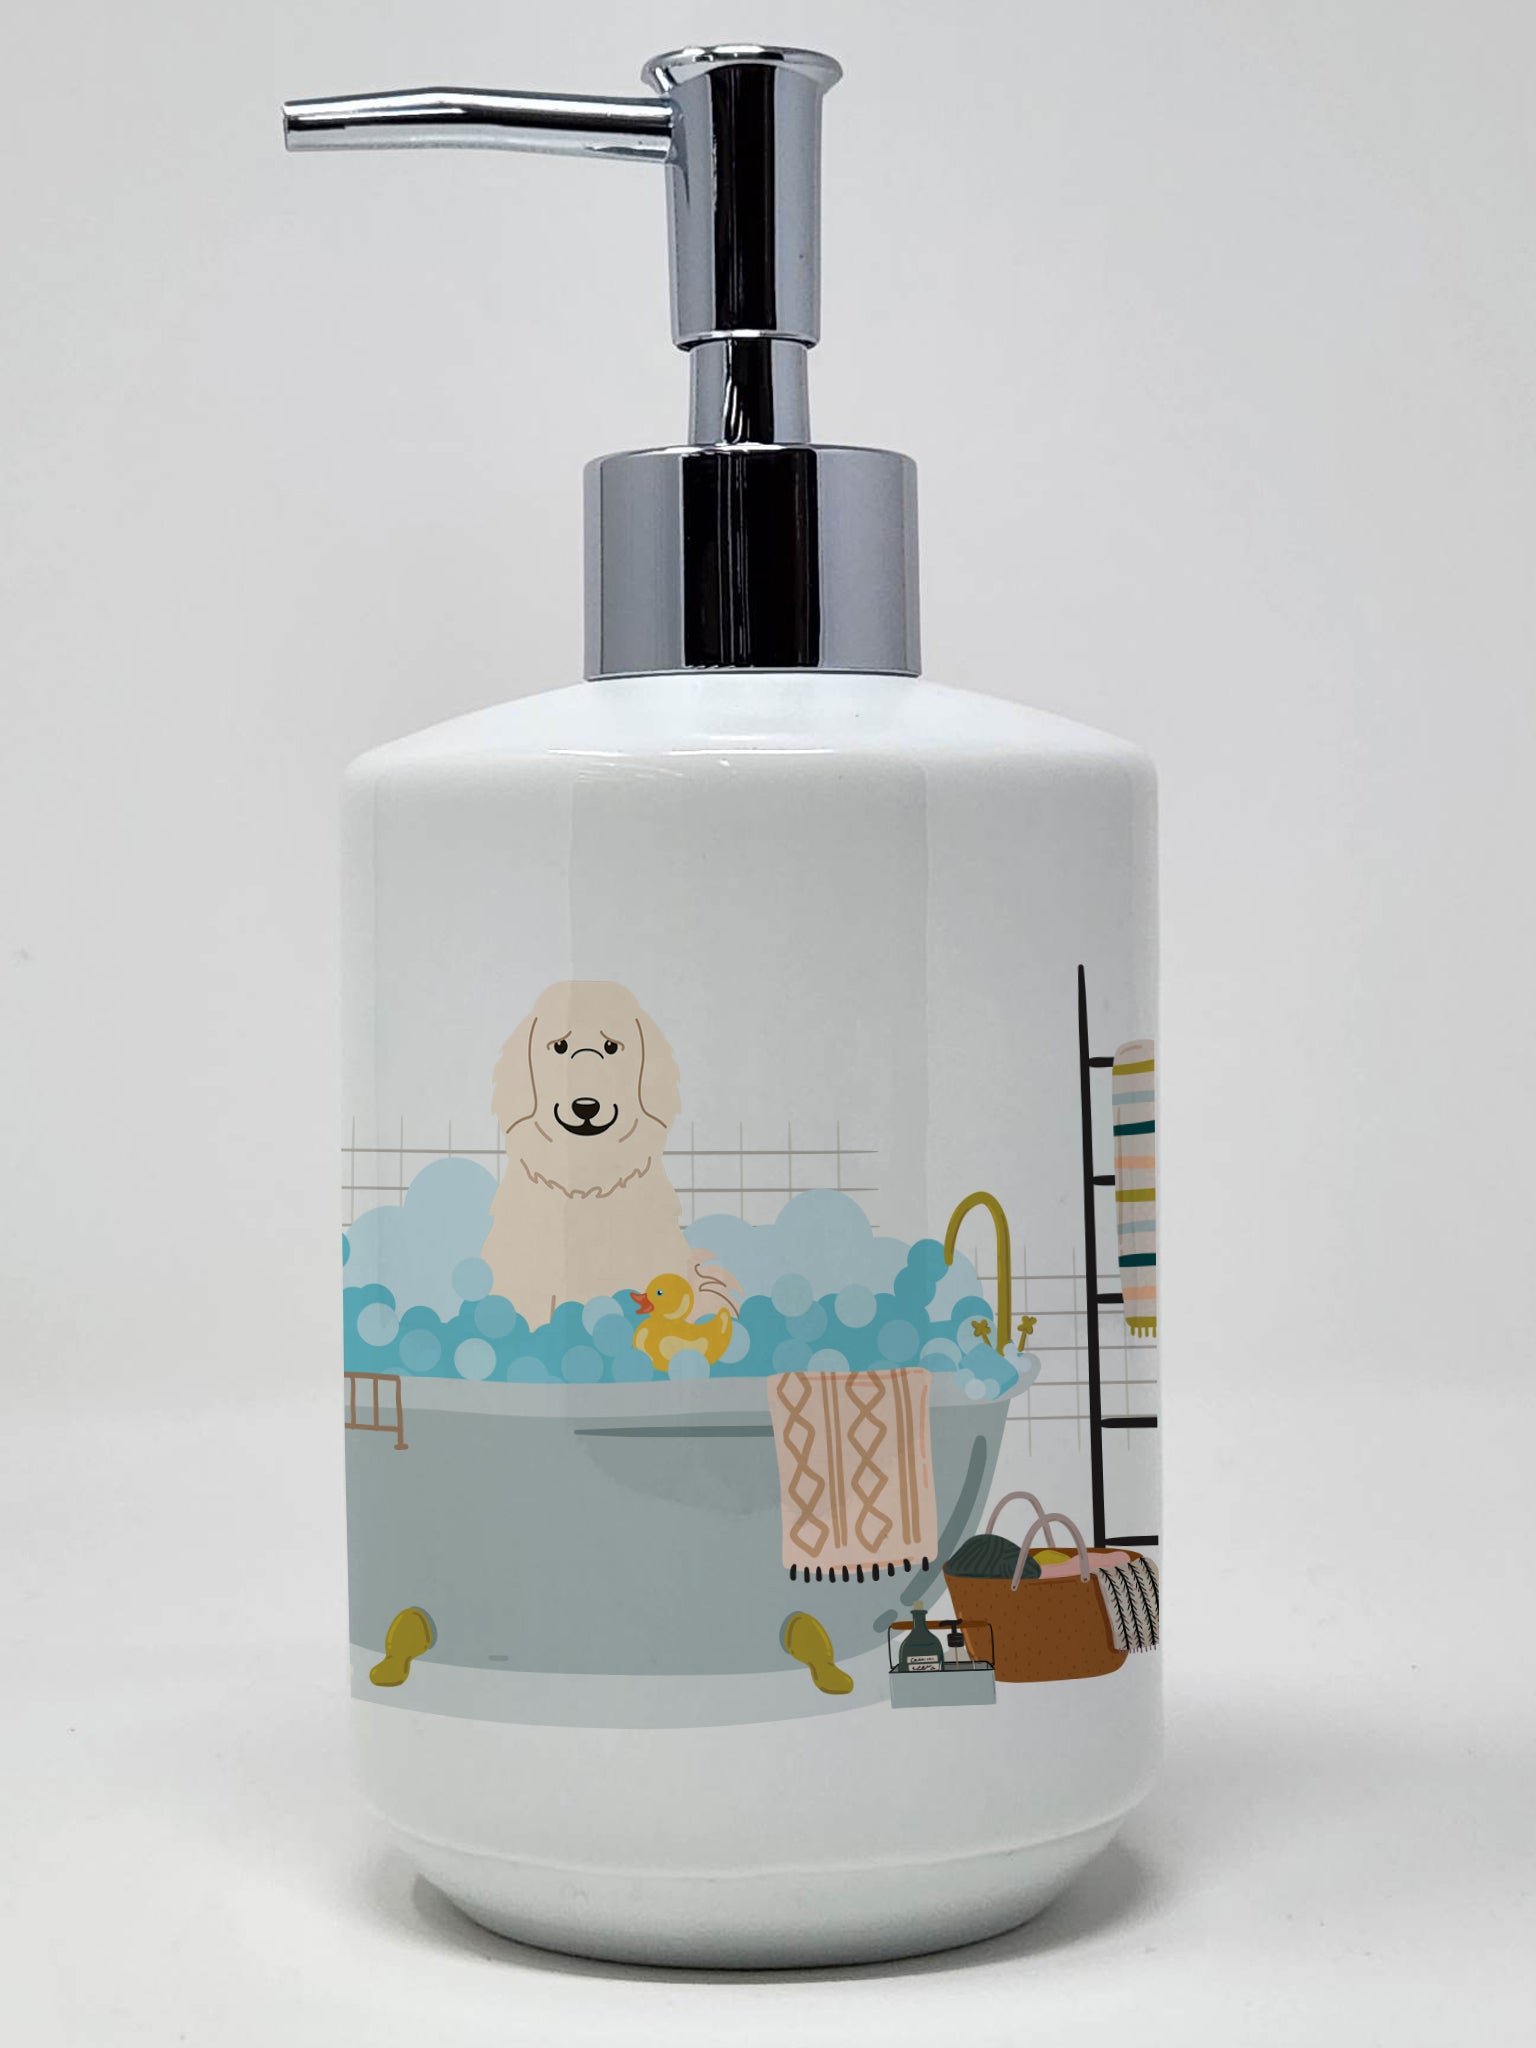 Buy this Great Pyrenese in Bathtub Ceramic Soap Dispenser